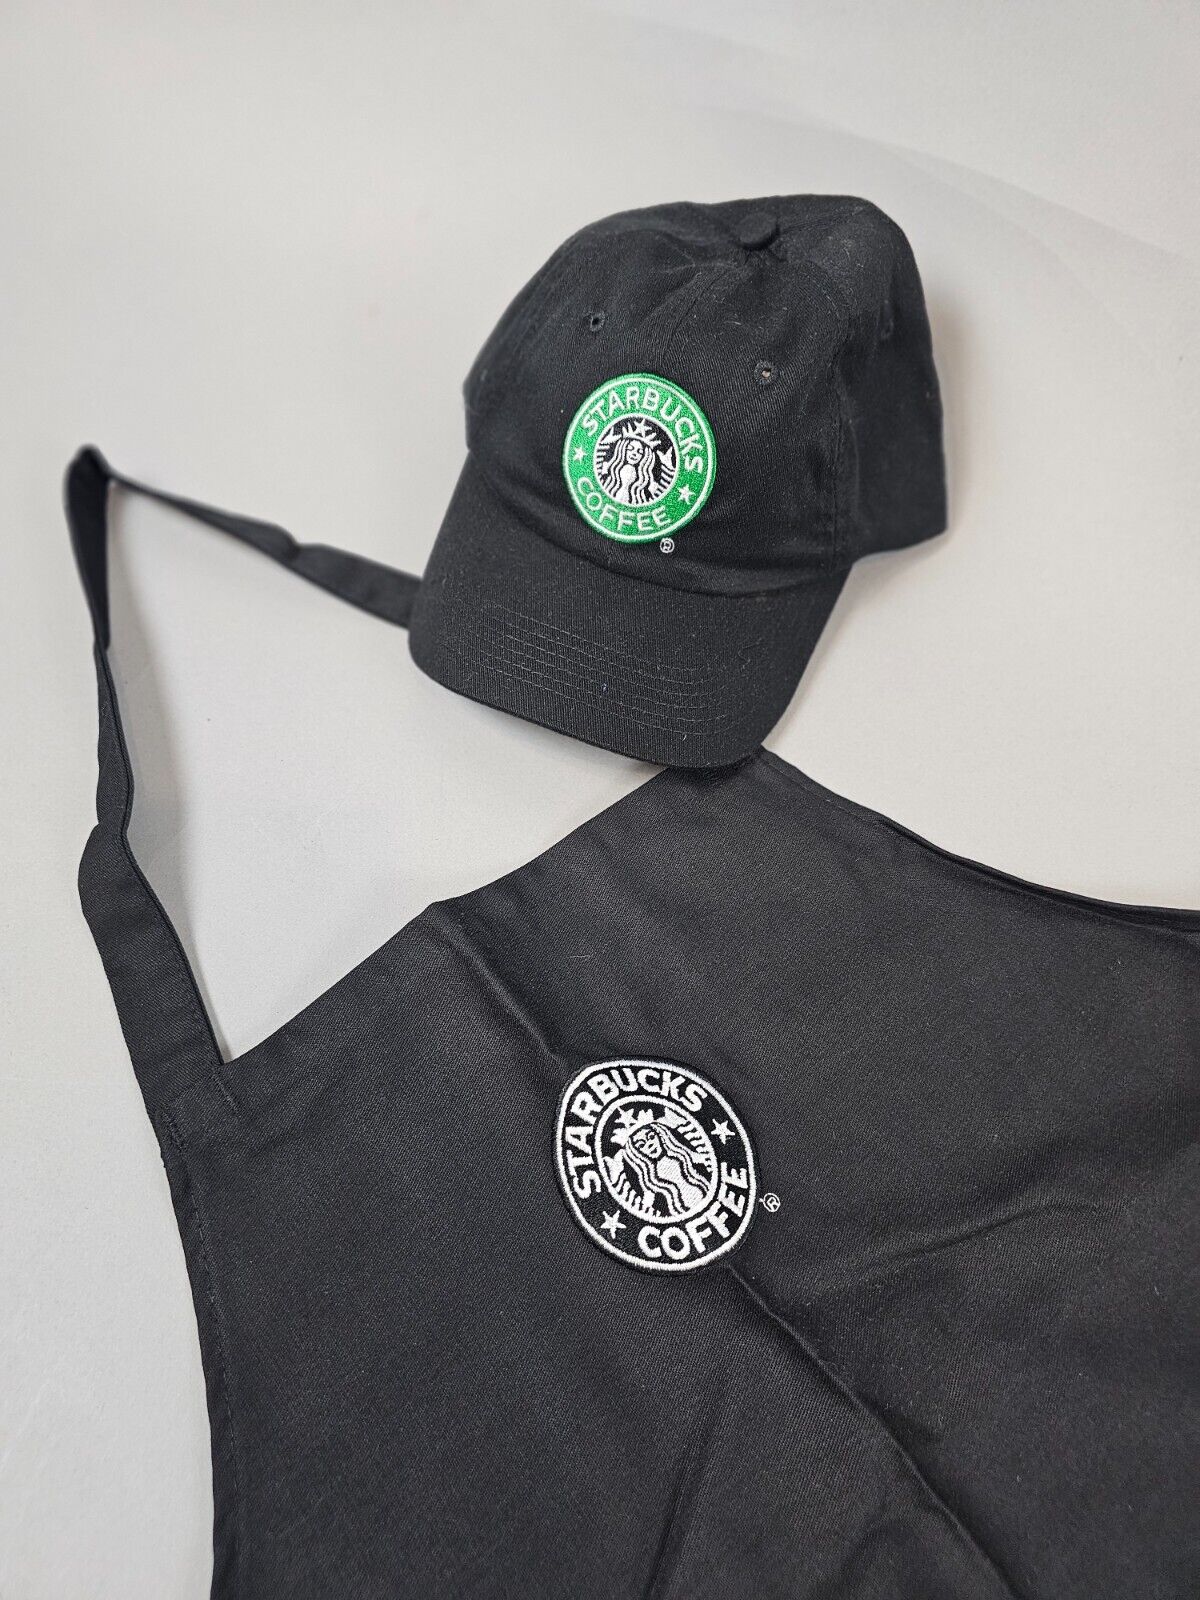 New STARBUCKS black apron and cap